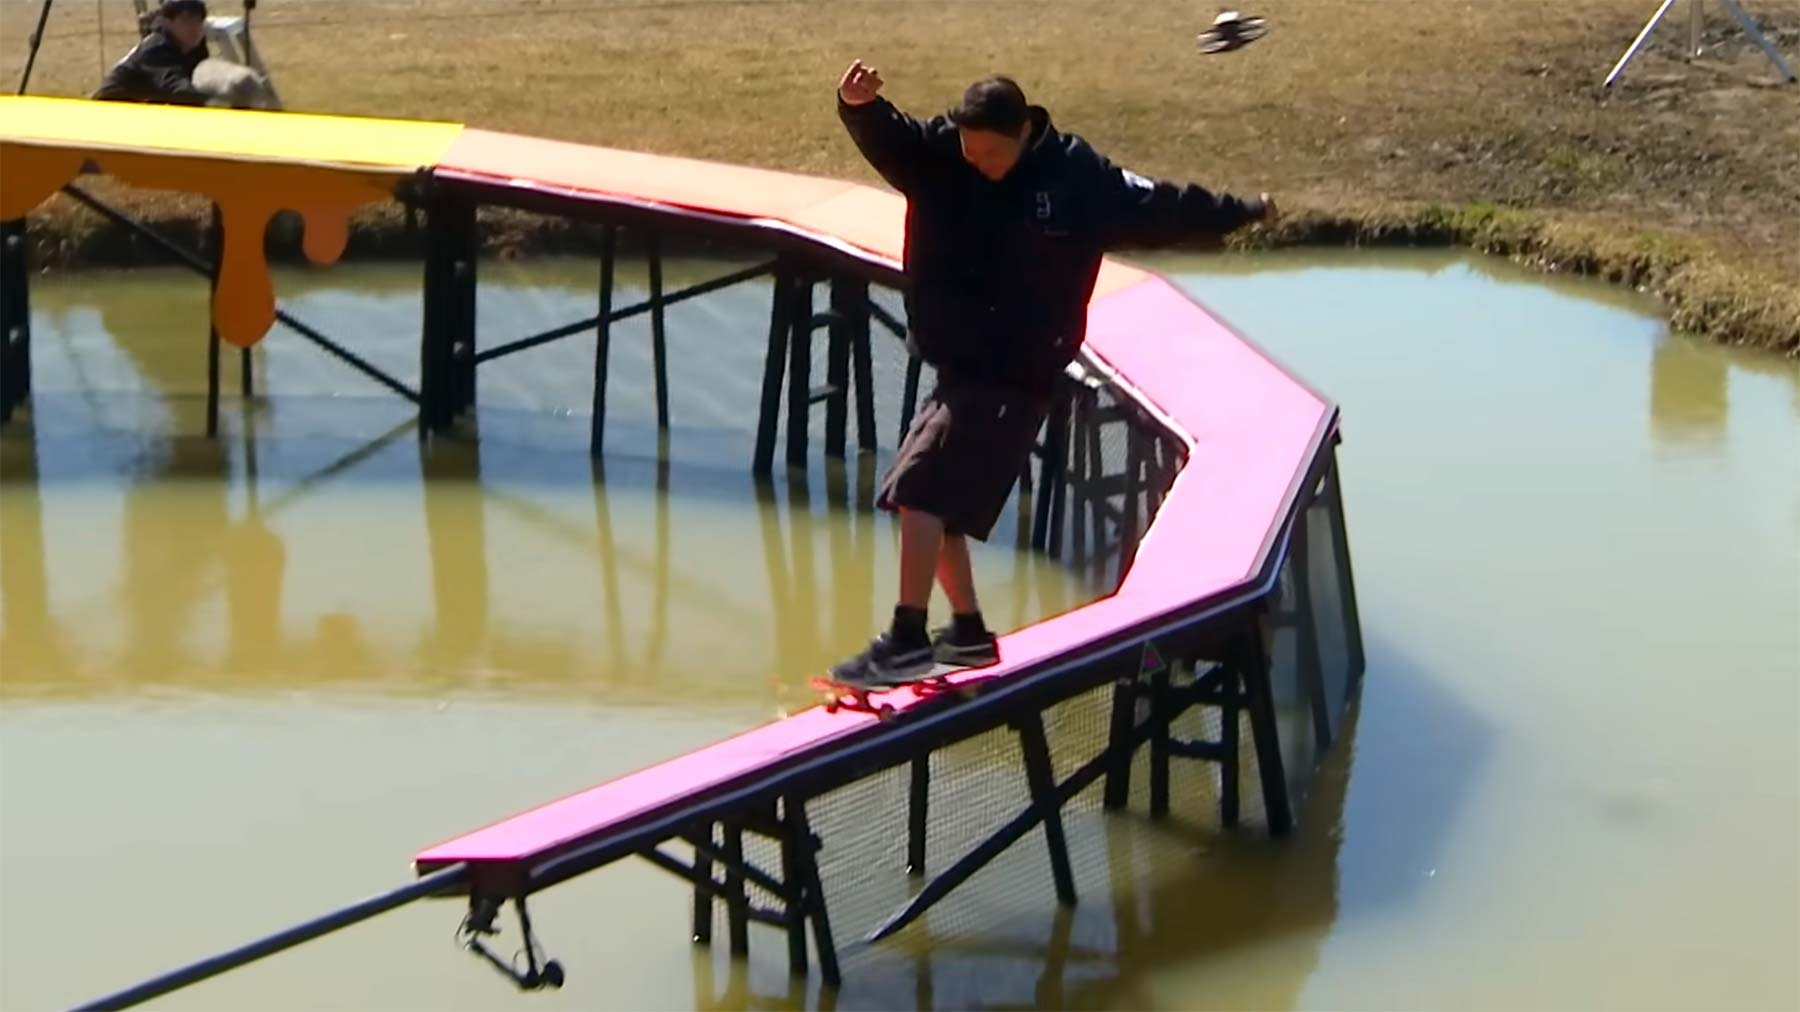 Japanische TV-Sendung lässt Skateboarder über Hindernisse fahren